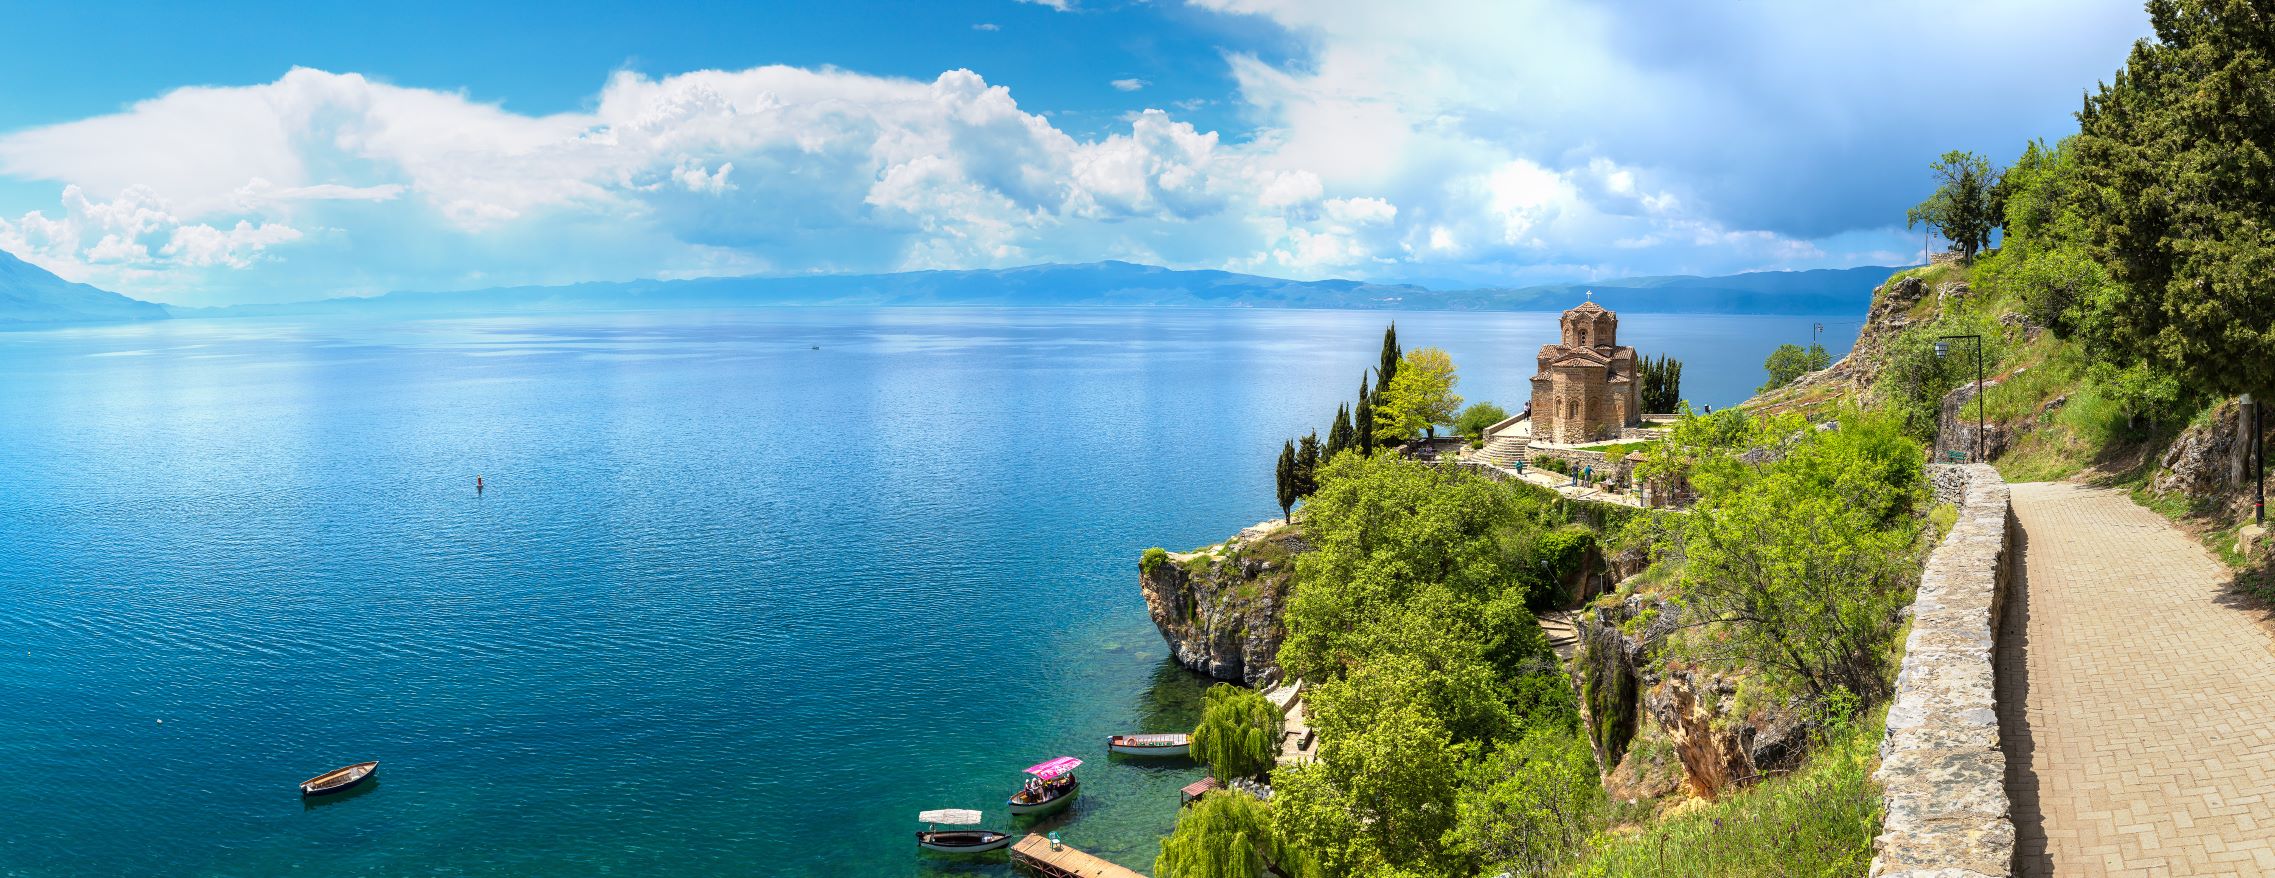 KNMtravel DMC, Macedonia del Norte, lago Ohrid